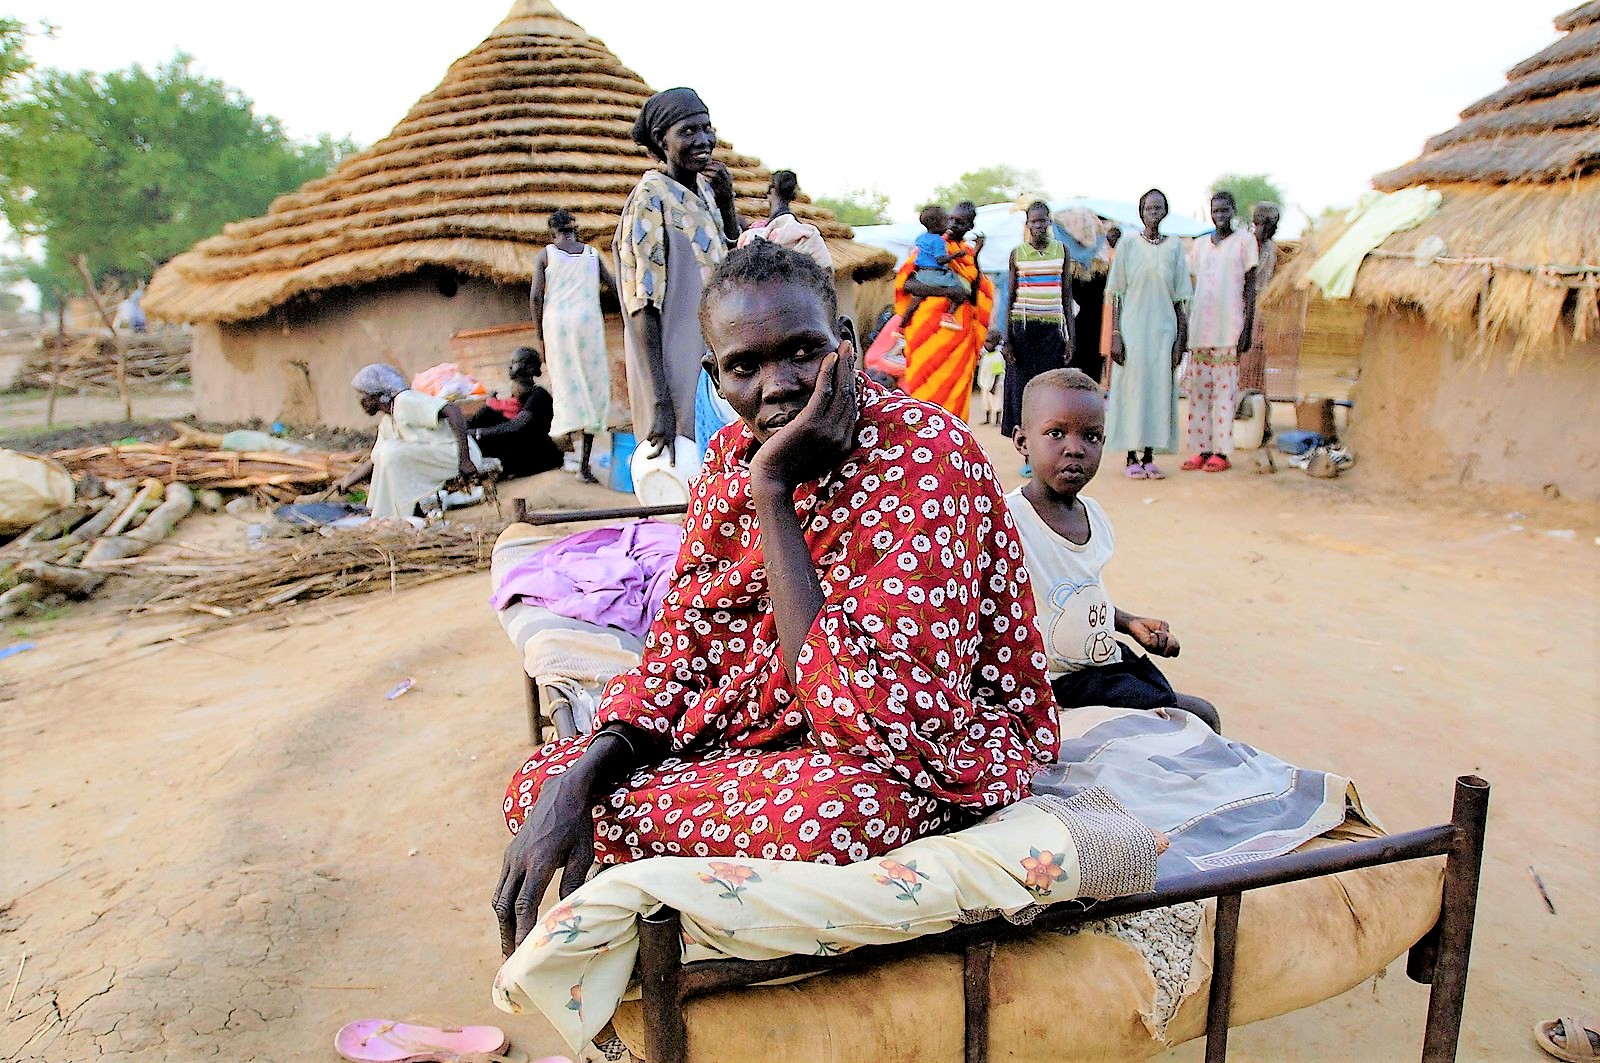 Sud Sudan, stuprate e picchiate 125 donne e bimbe in 10 giorni